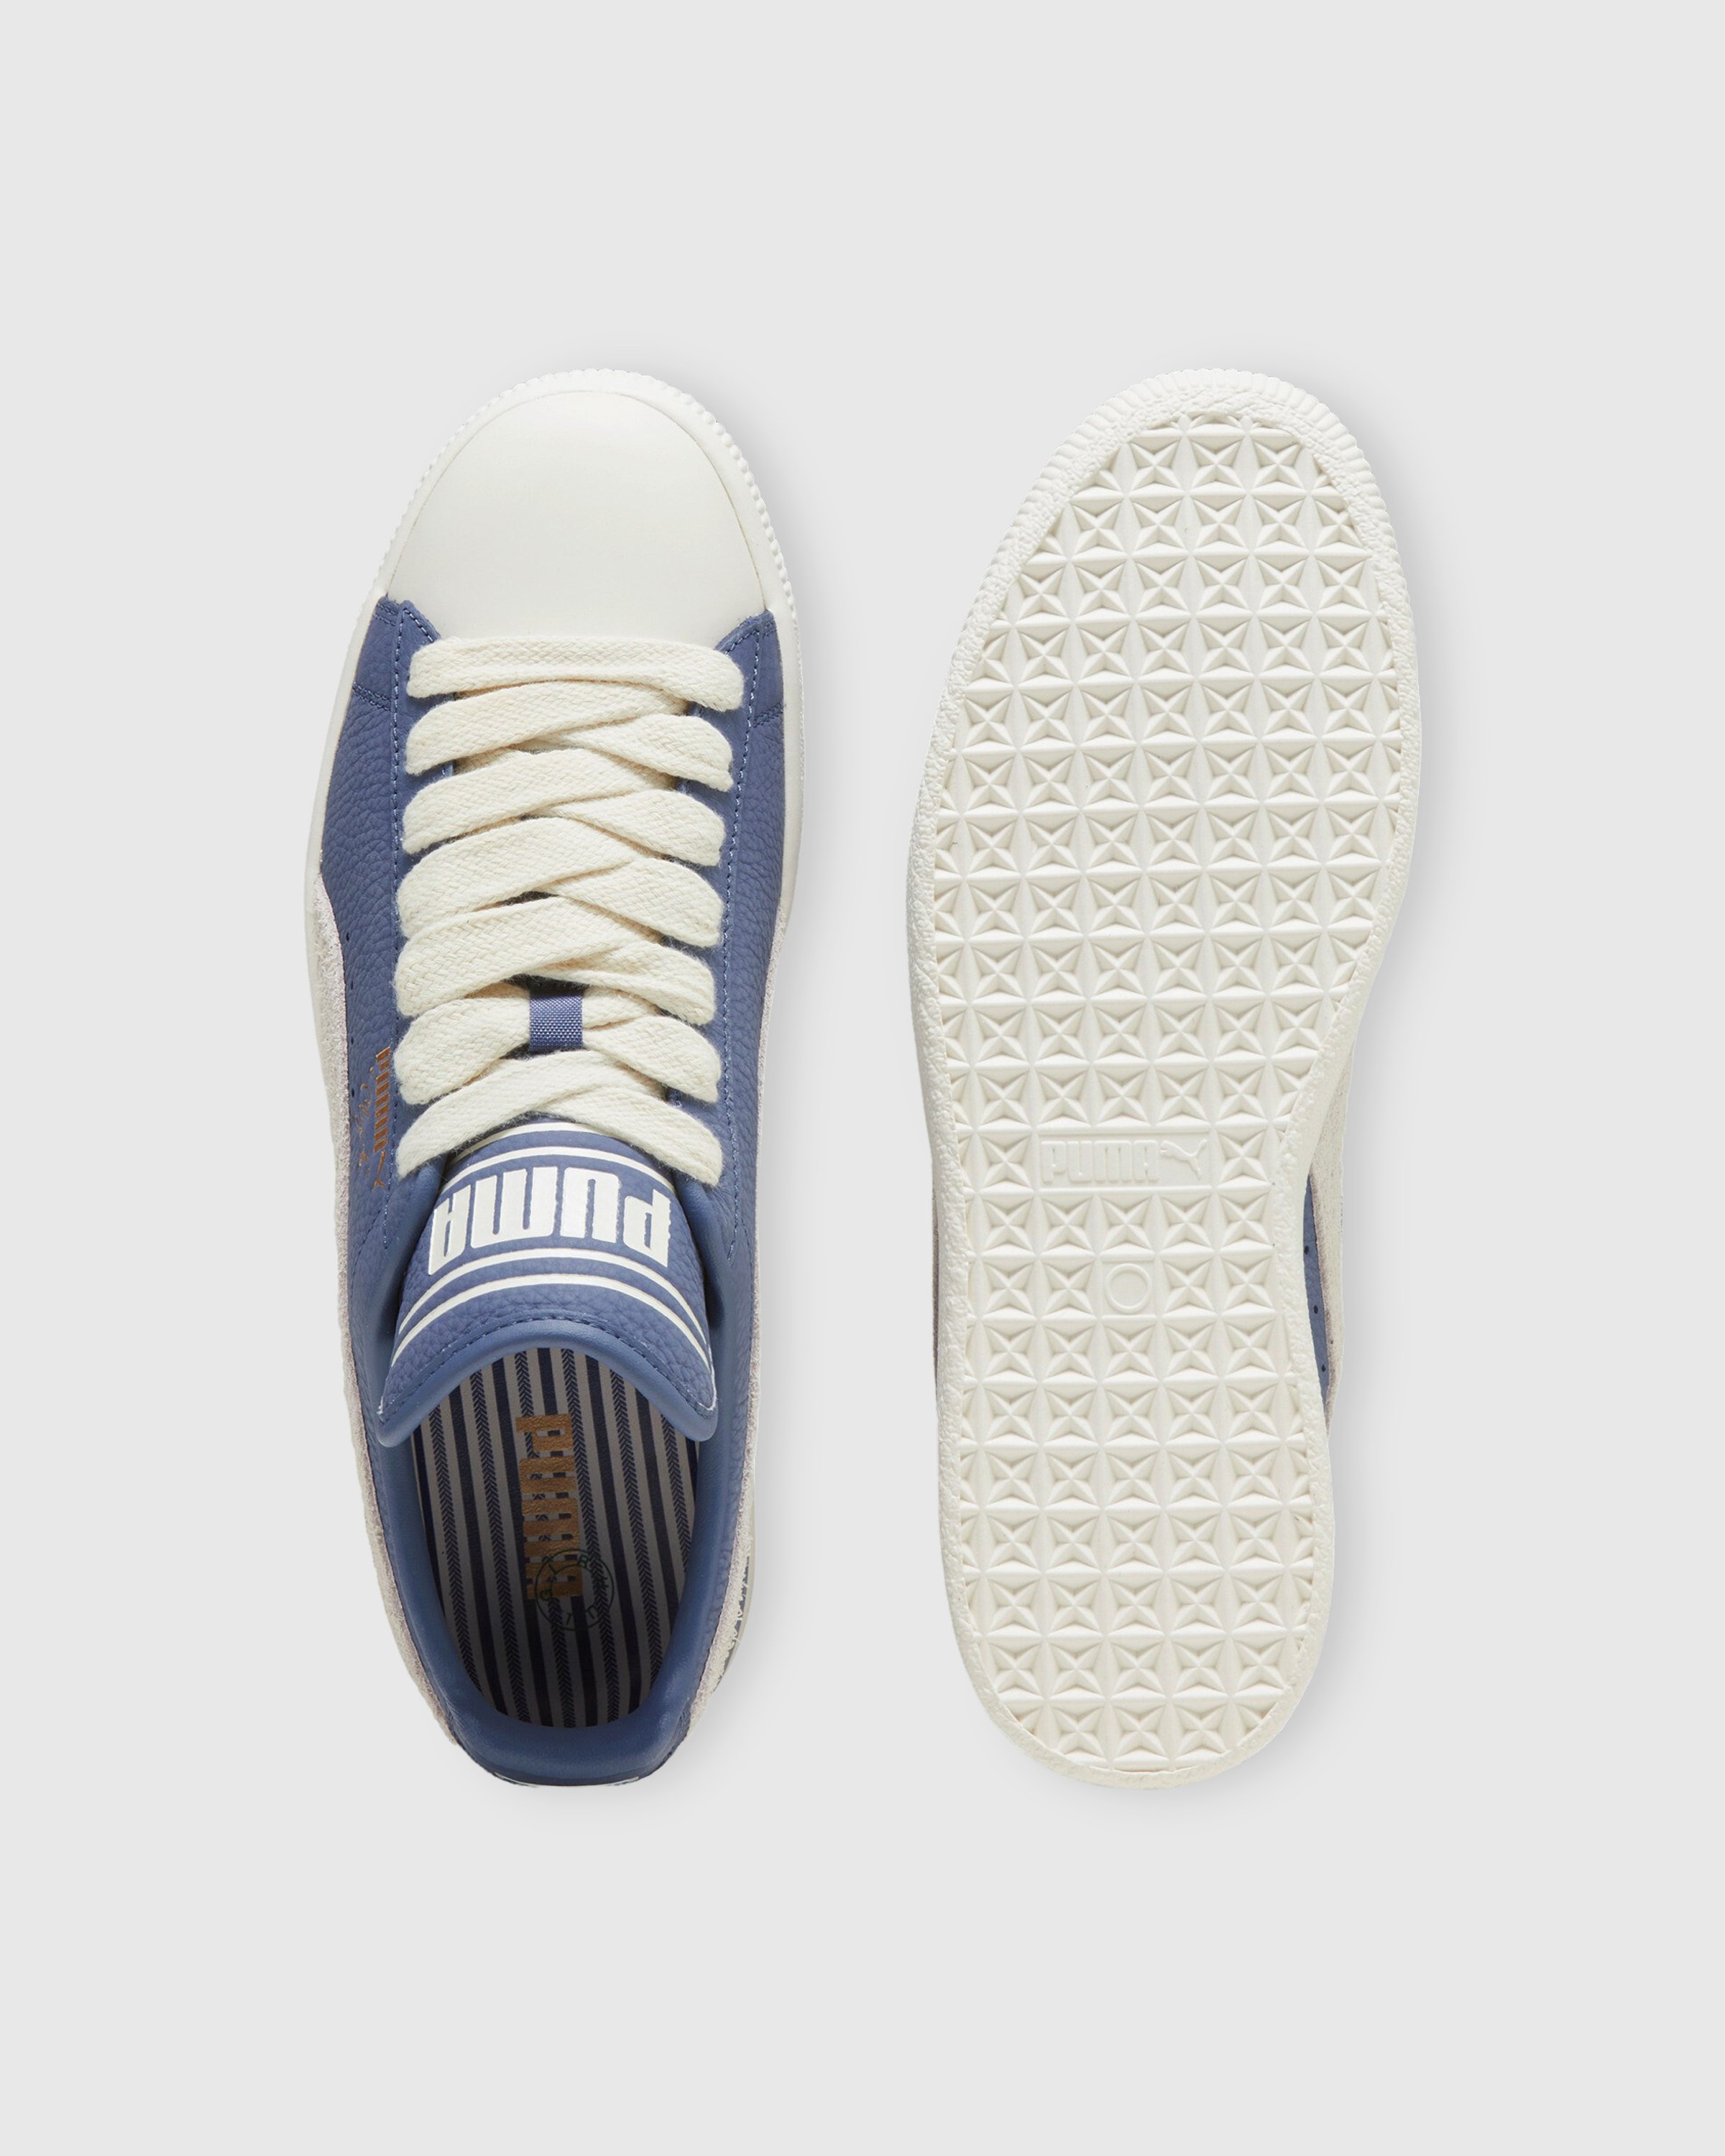 Puma - Clyde Rhuigi Pristine/Pristine/Inky Blue - Footwear - Multi - Image 4